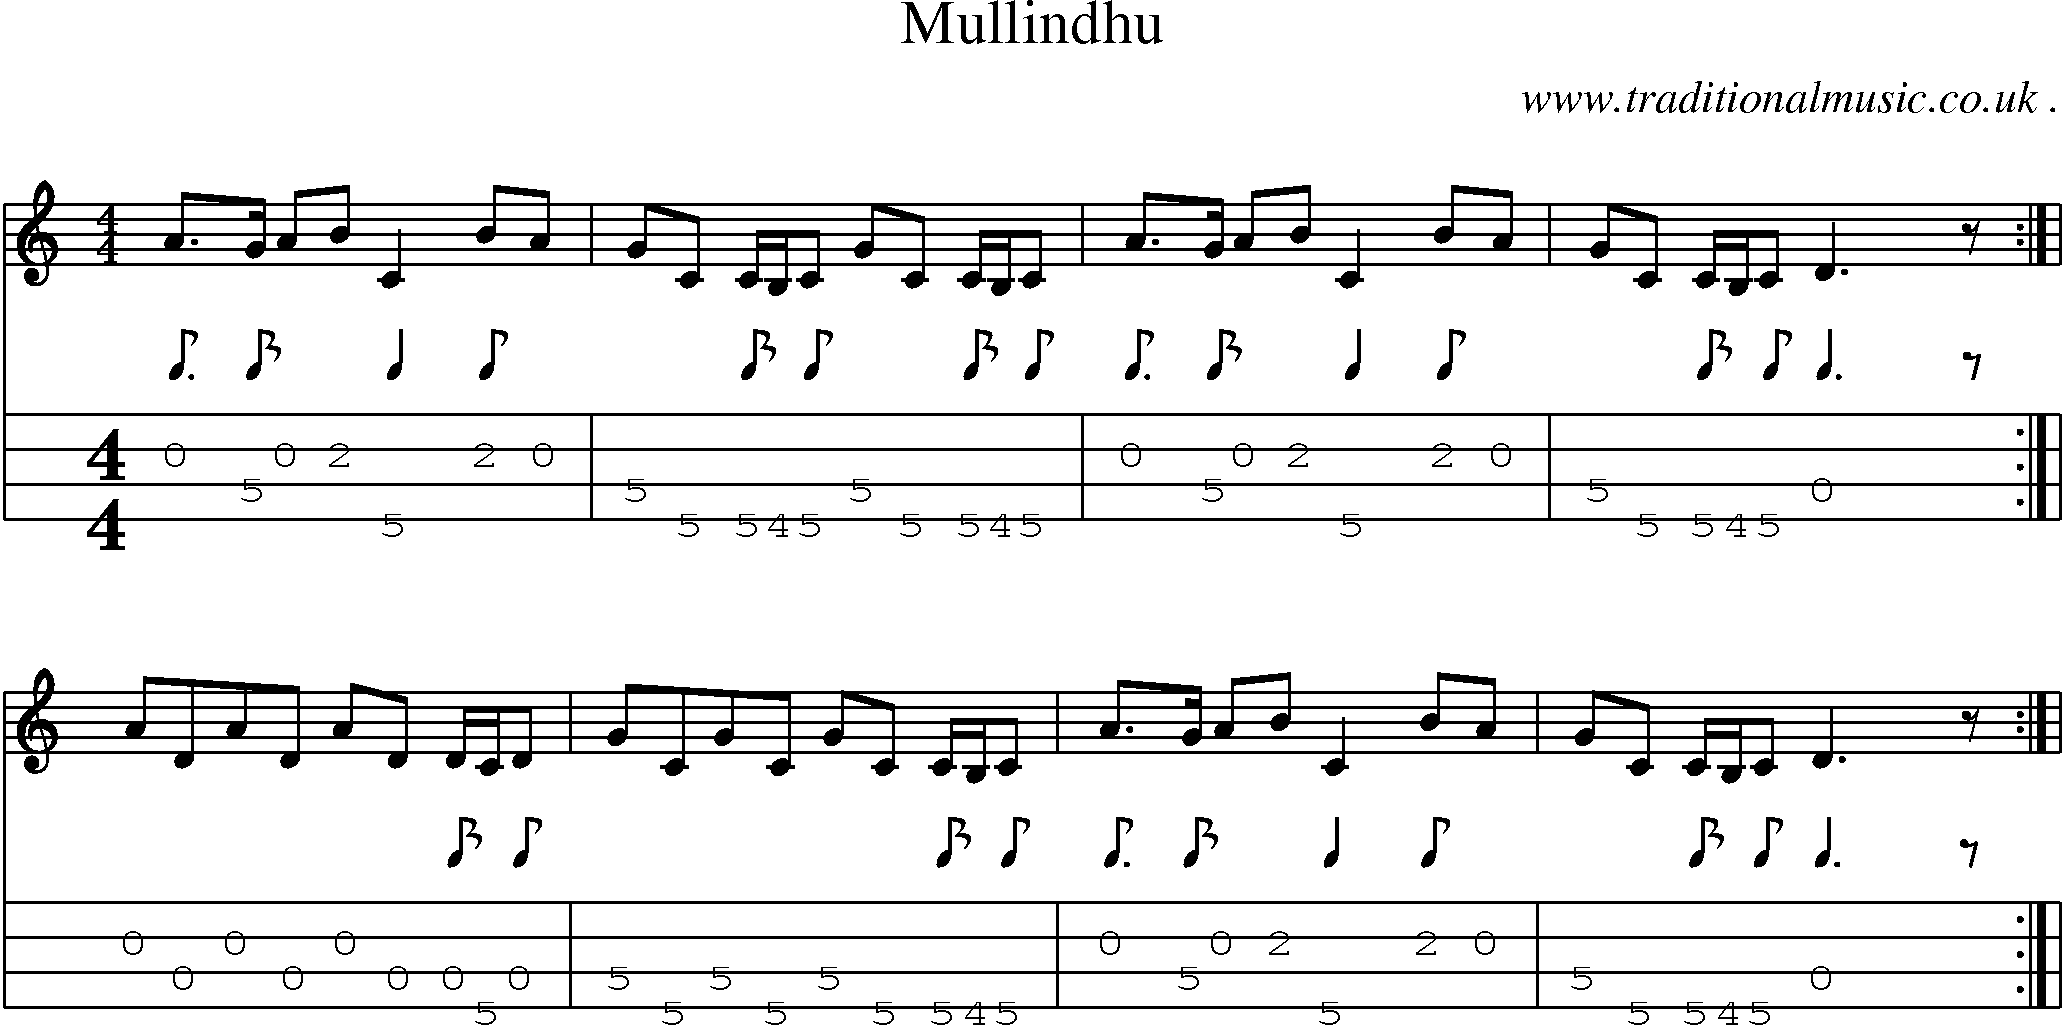 Sheet-Music and Mandolin Tabs for Mullindhu